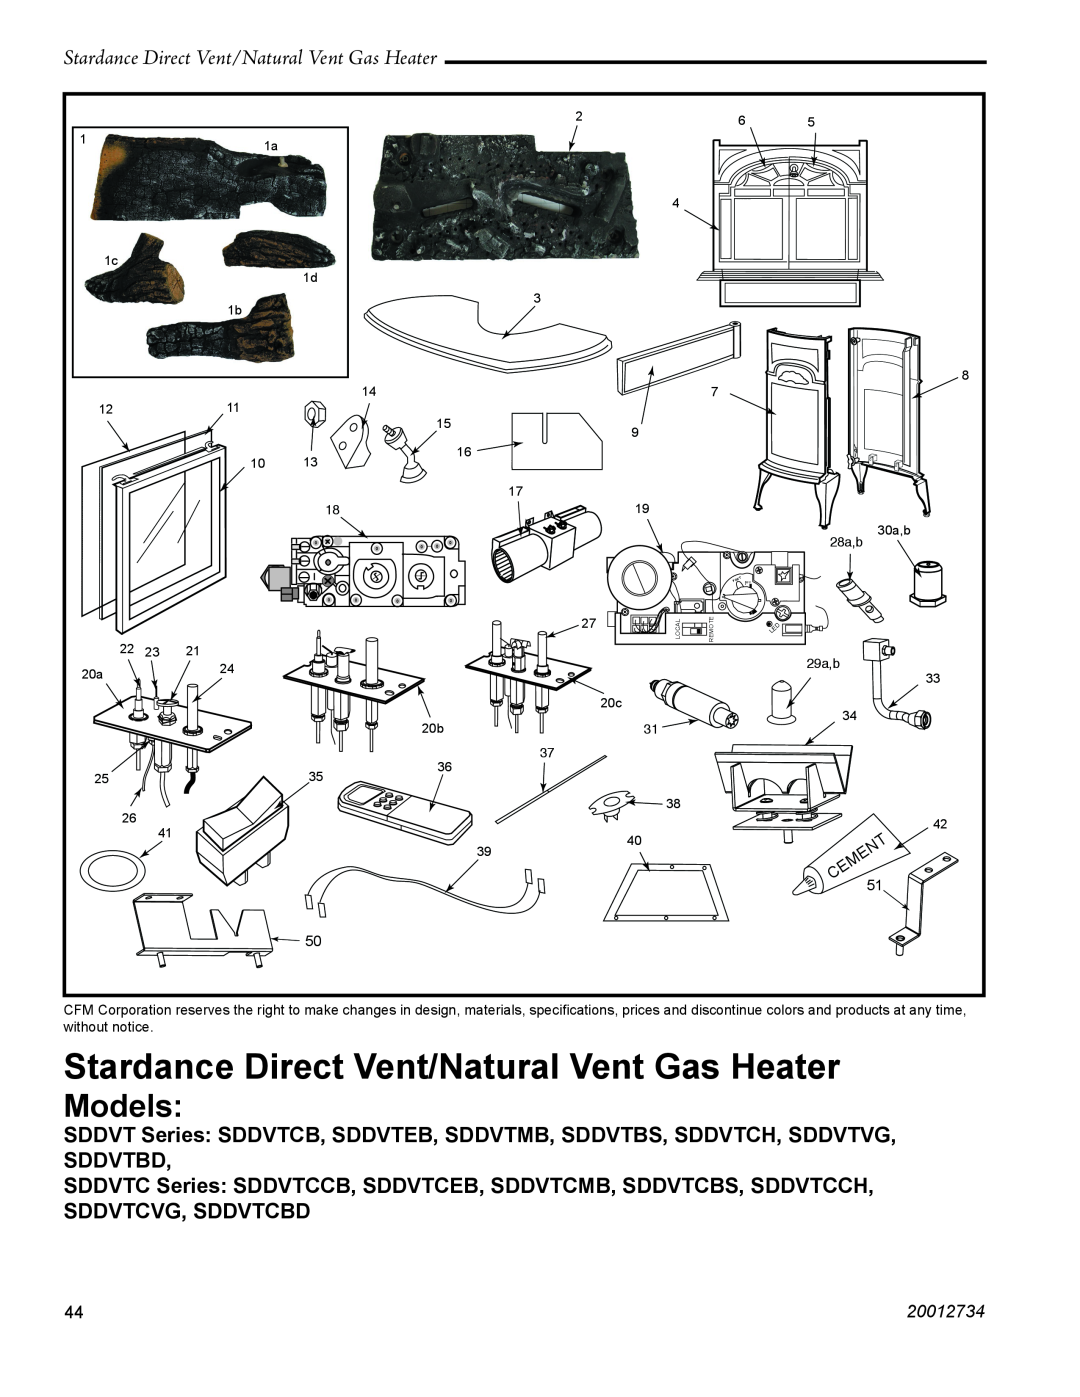 Vermont Casting SDDVTCVG Sddvtbd, Sddvtcvg, Sddvtcbd, Stardance Direct Vent/Natural Vent Gas Heater, Models, 20012734 